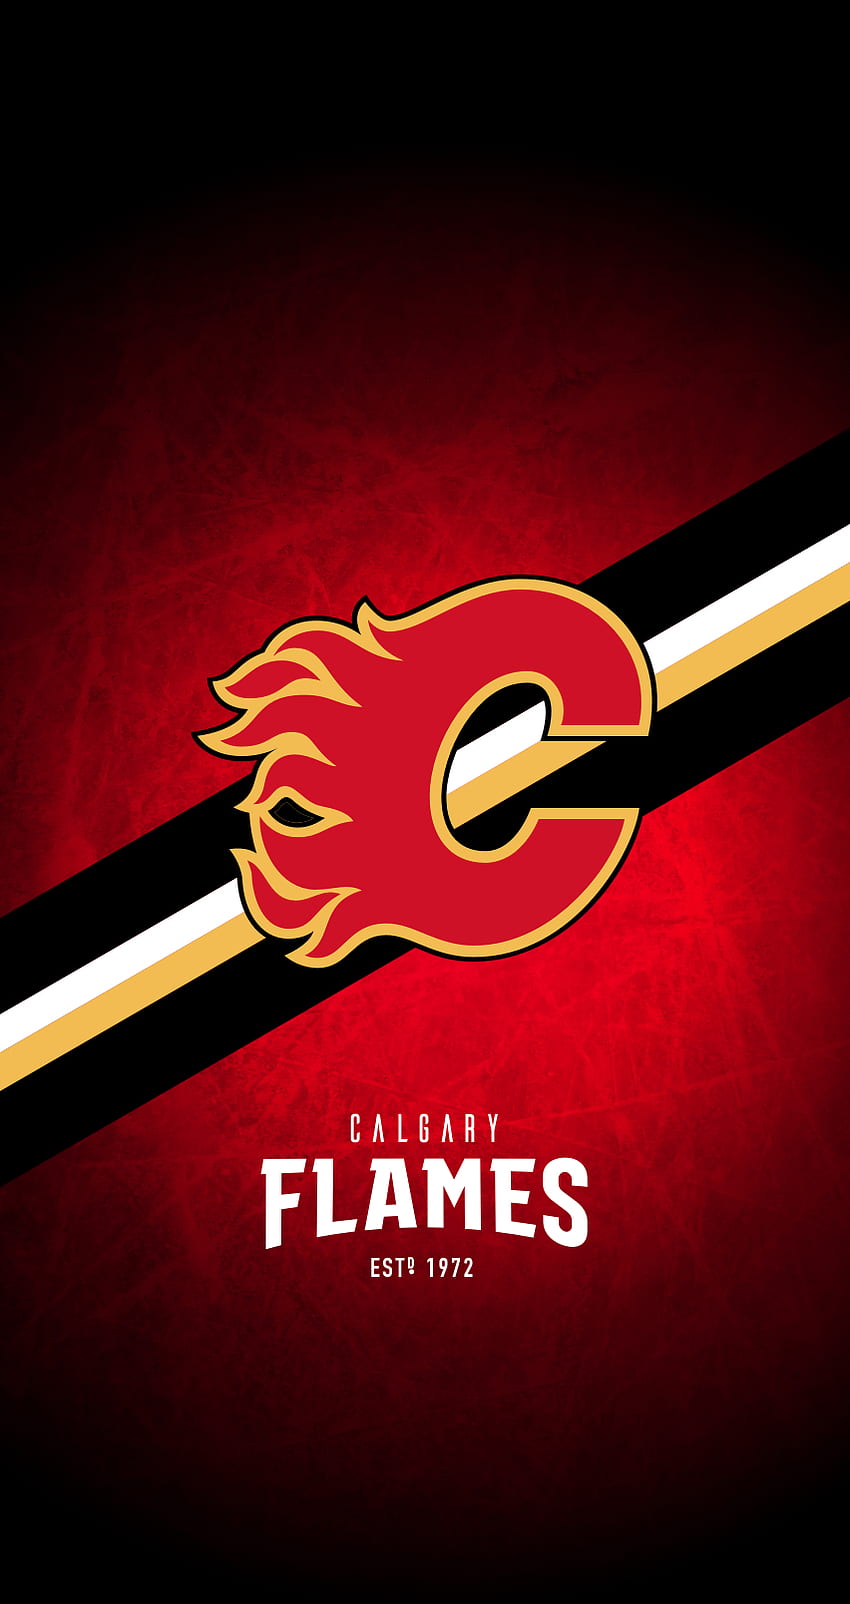 Made a quick phone wallpaper. Praise Blasty! : r/CalgaryFlames